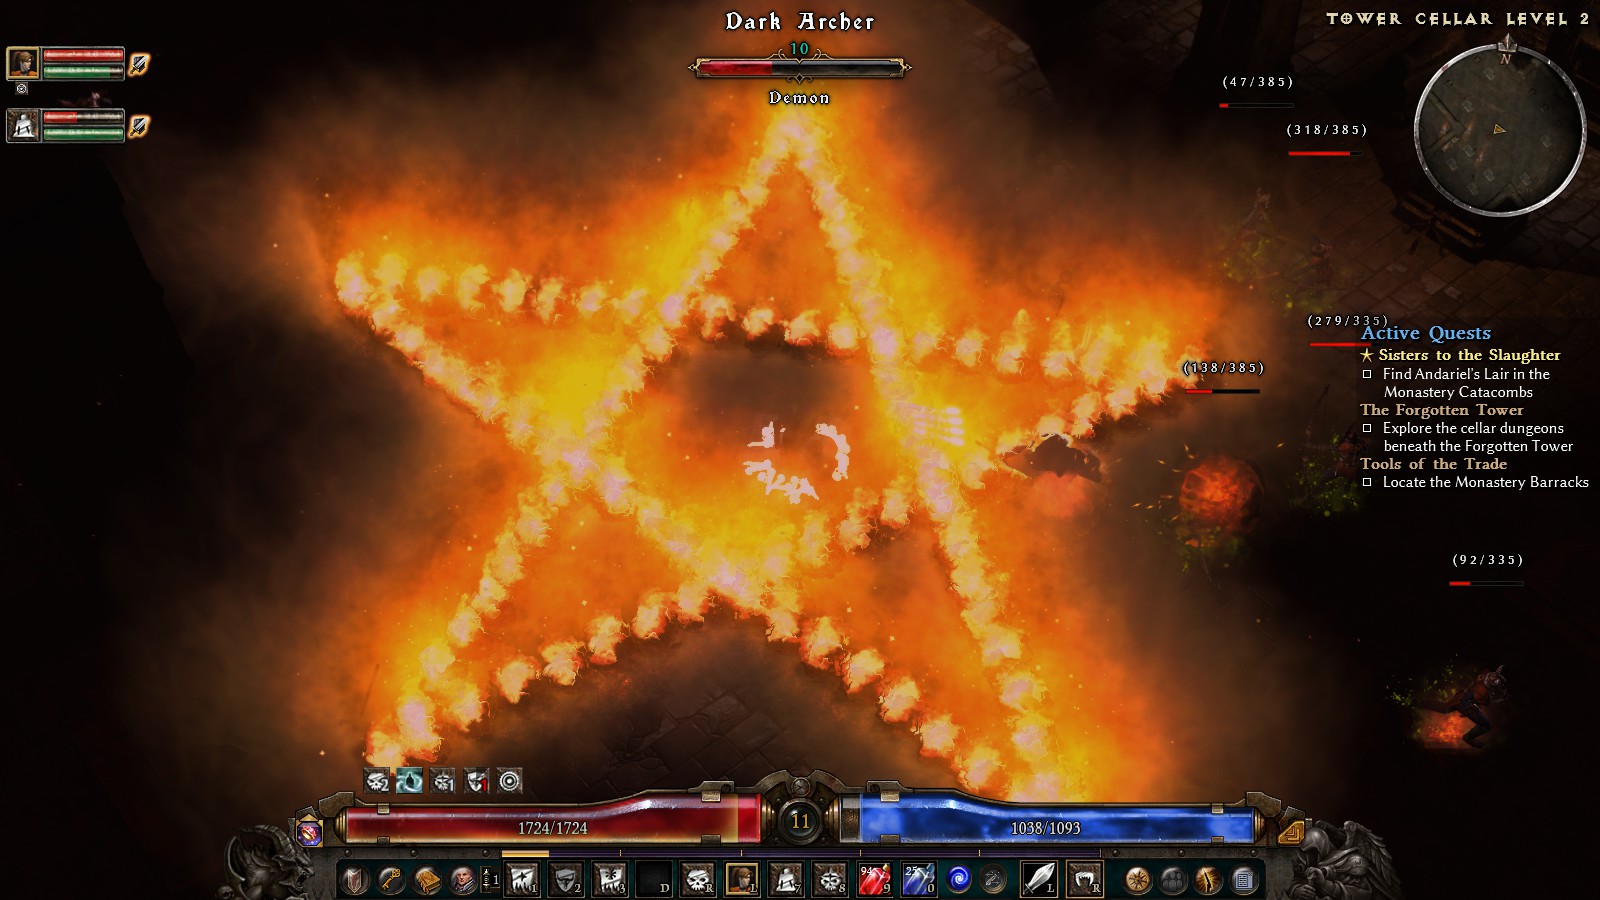 Best Diablo 2 mods to recapture the nostalgic grind